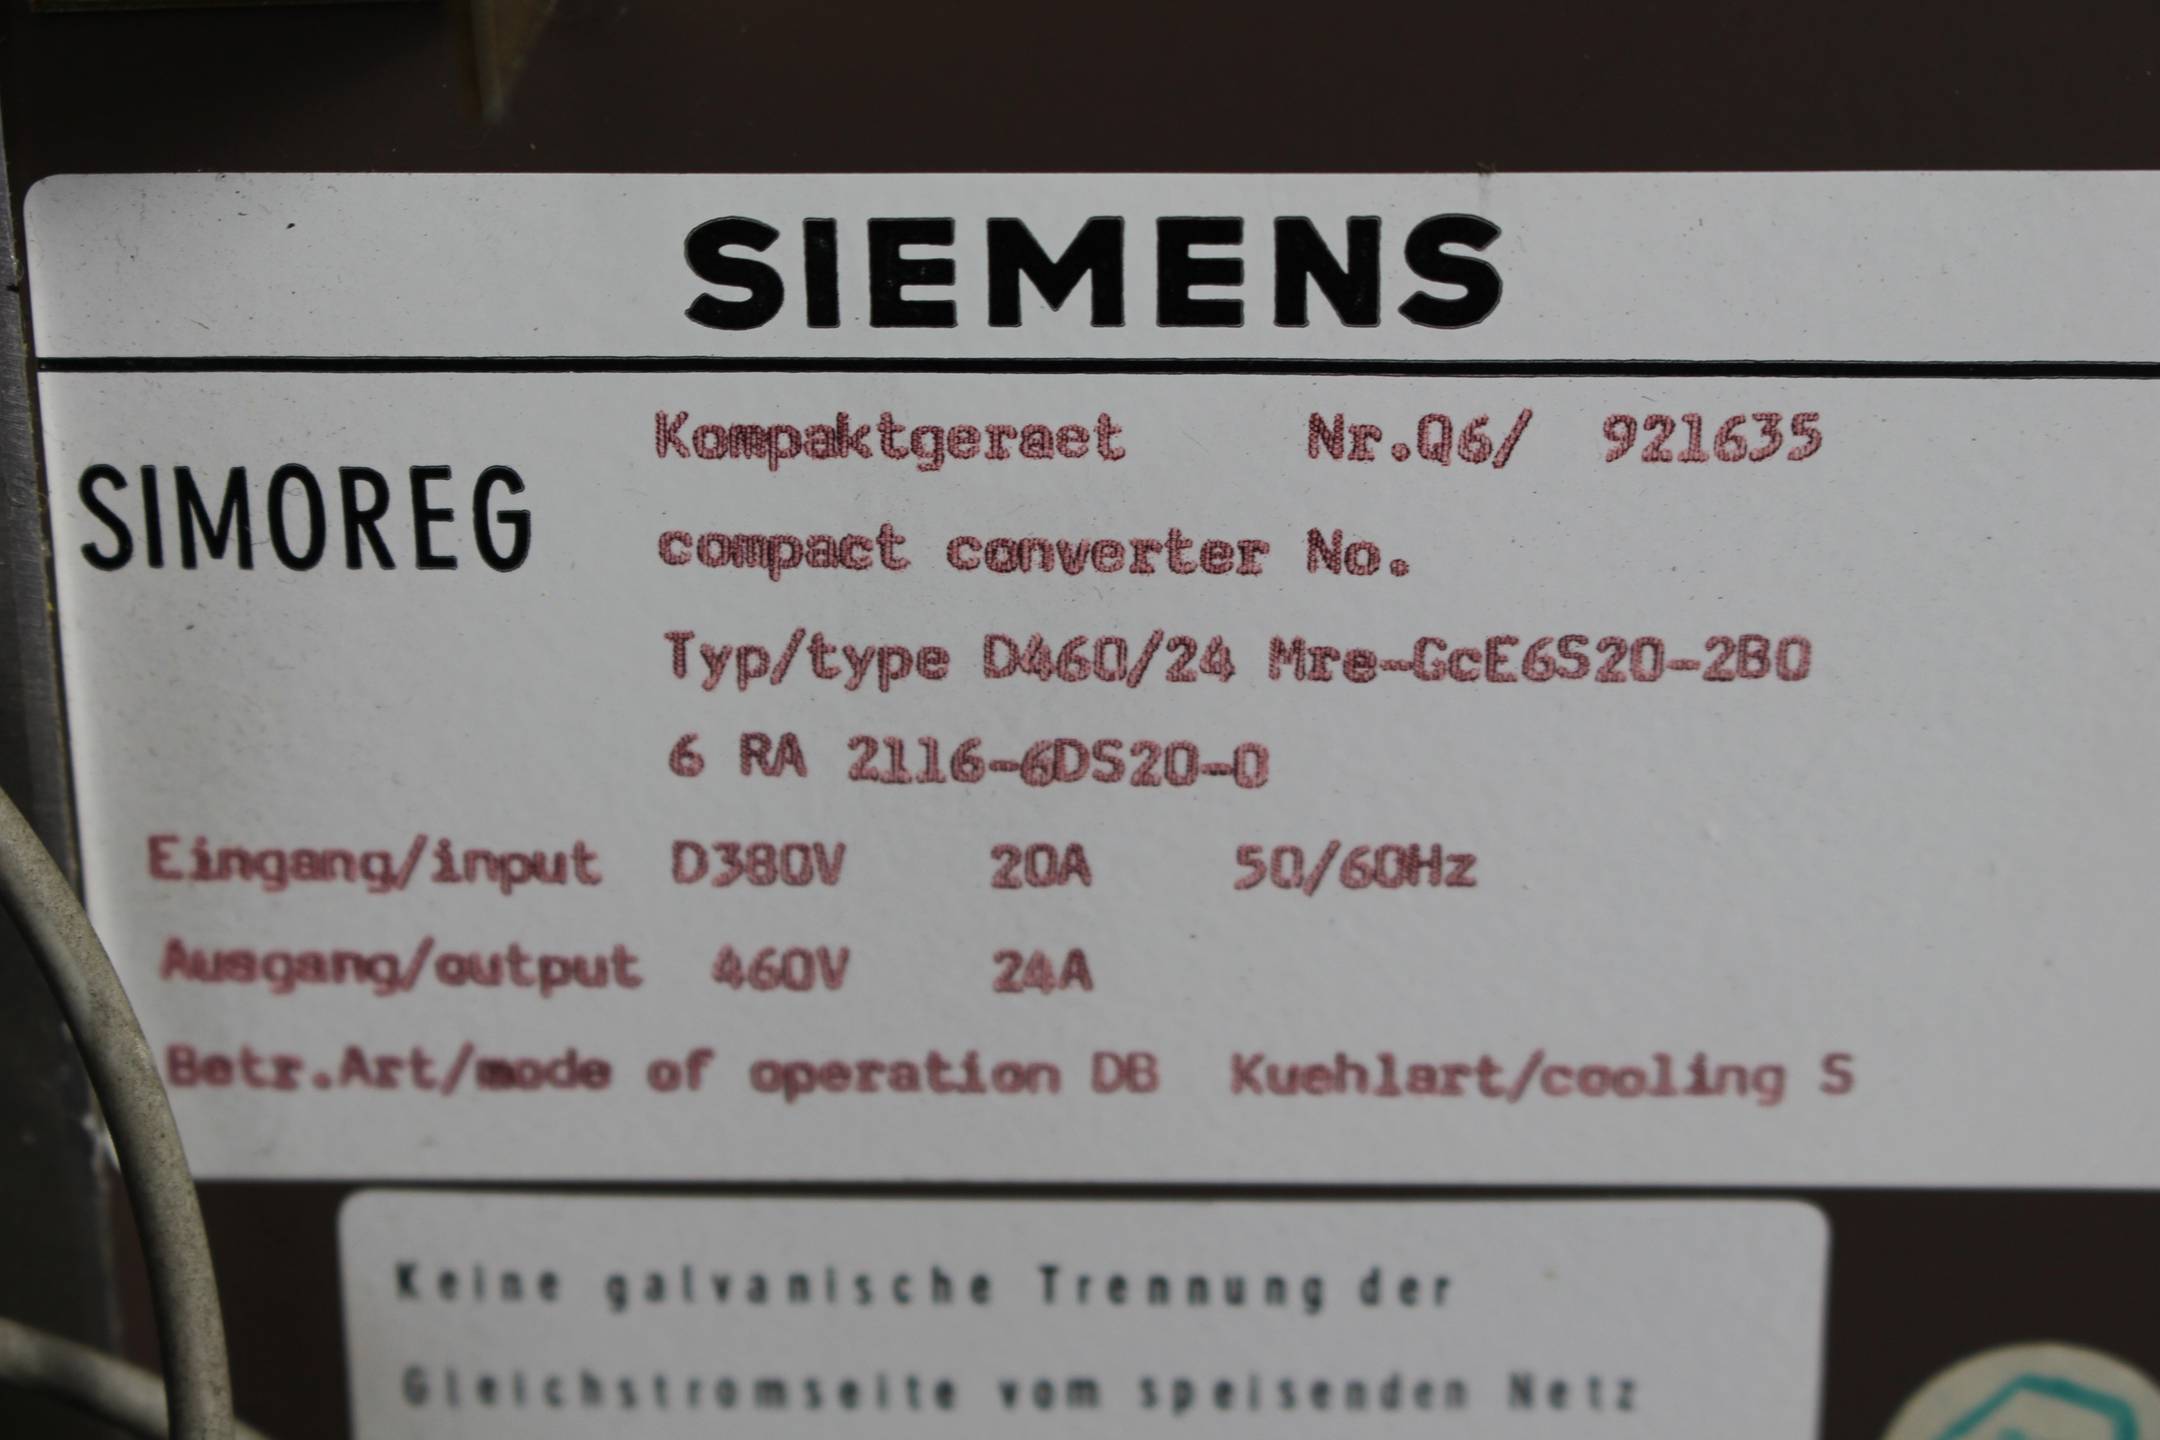 Siemens simoreg 6 RA 2116-6DS20-0 ( 6RA2116-6DS20-0 )